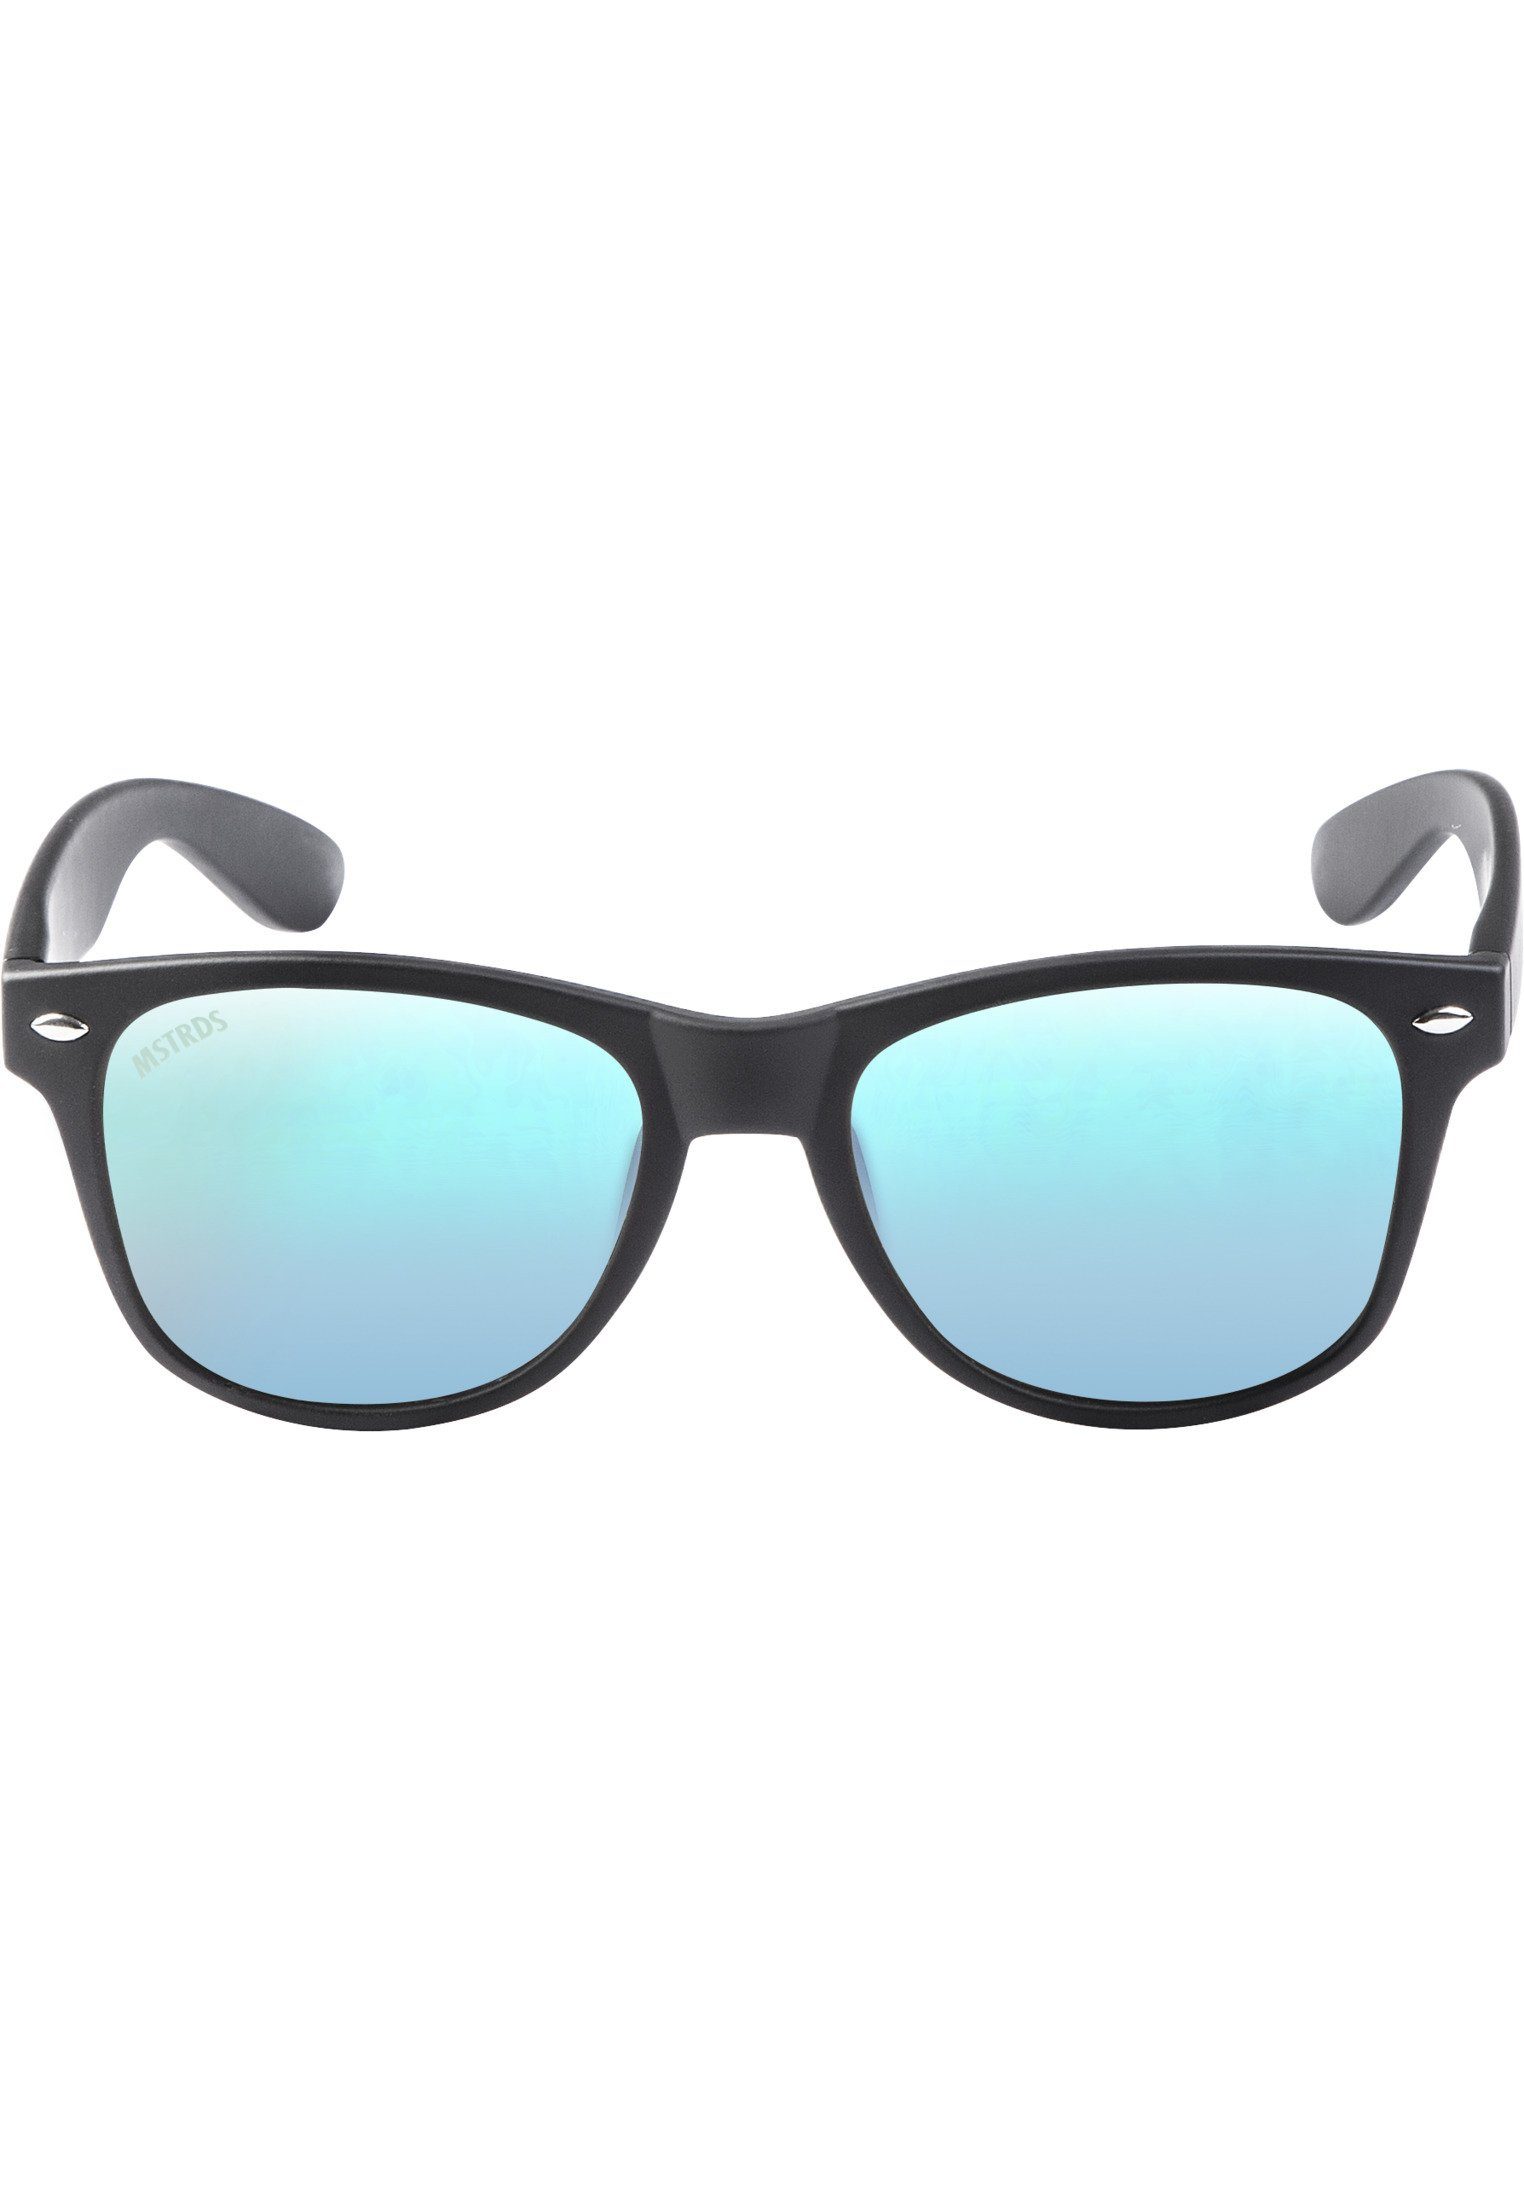 Accessoires blk/blue Sunglasses Sonnenbrille Youth MSTRDS Likoma